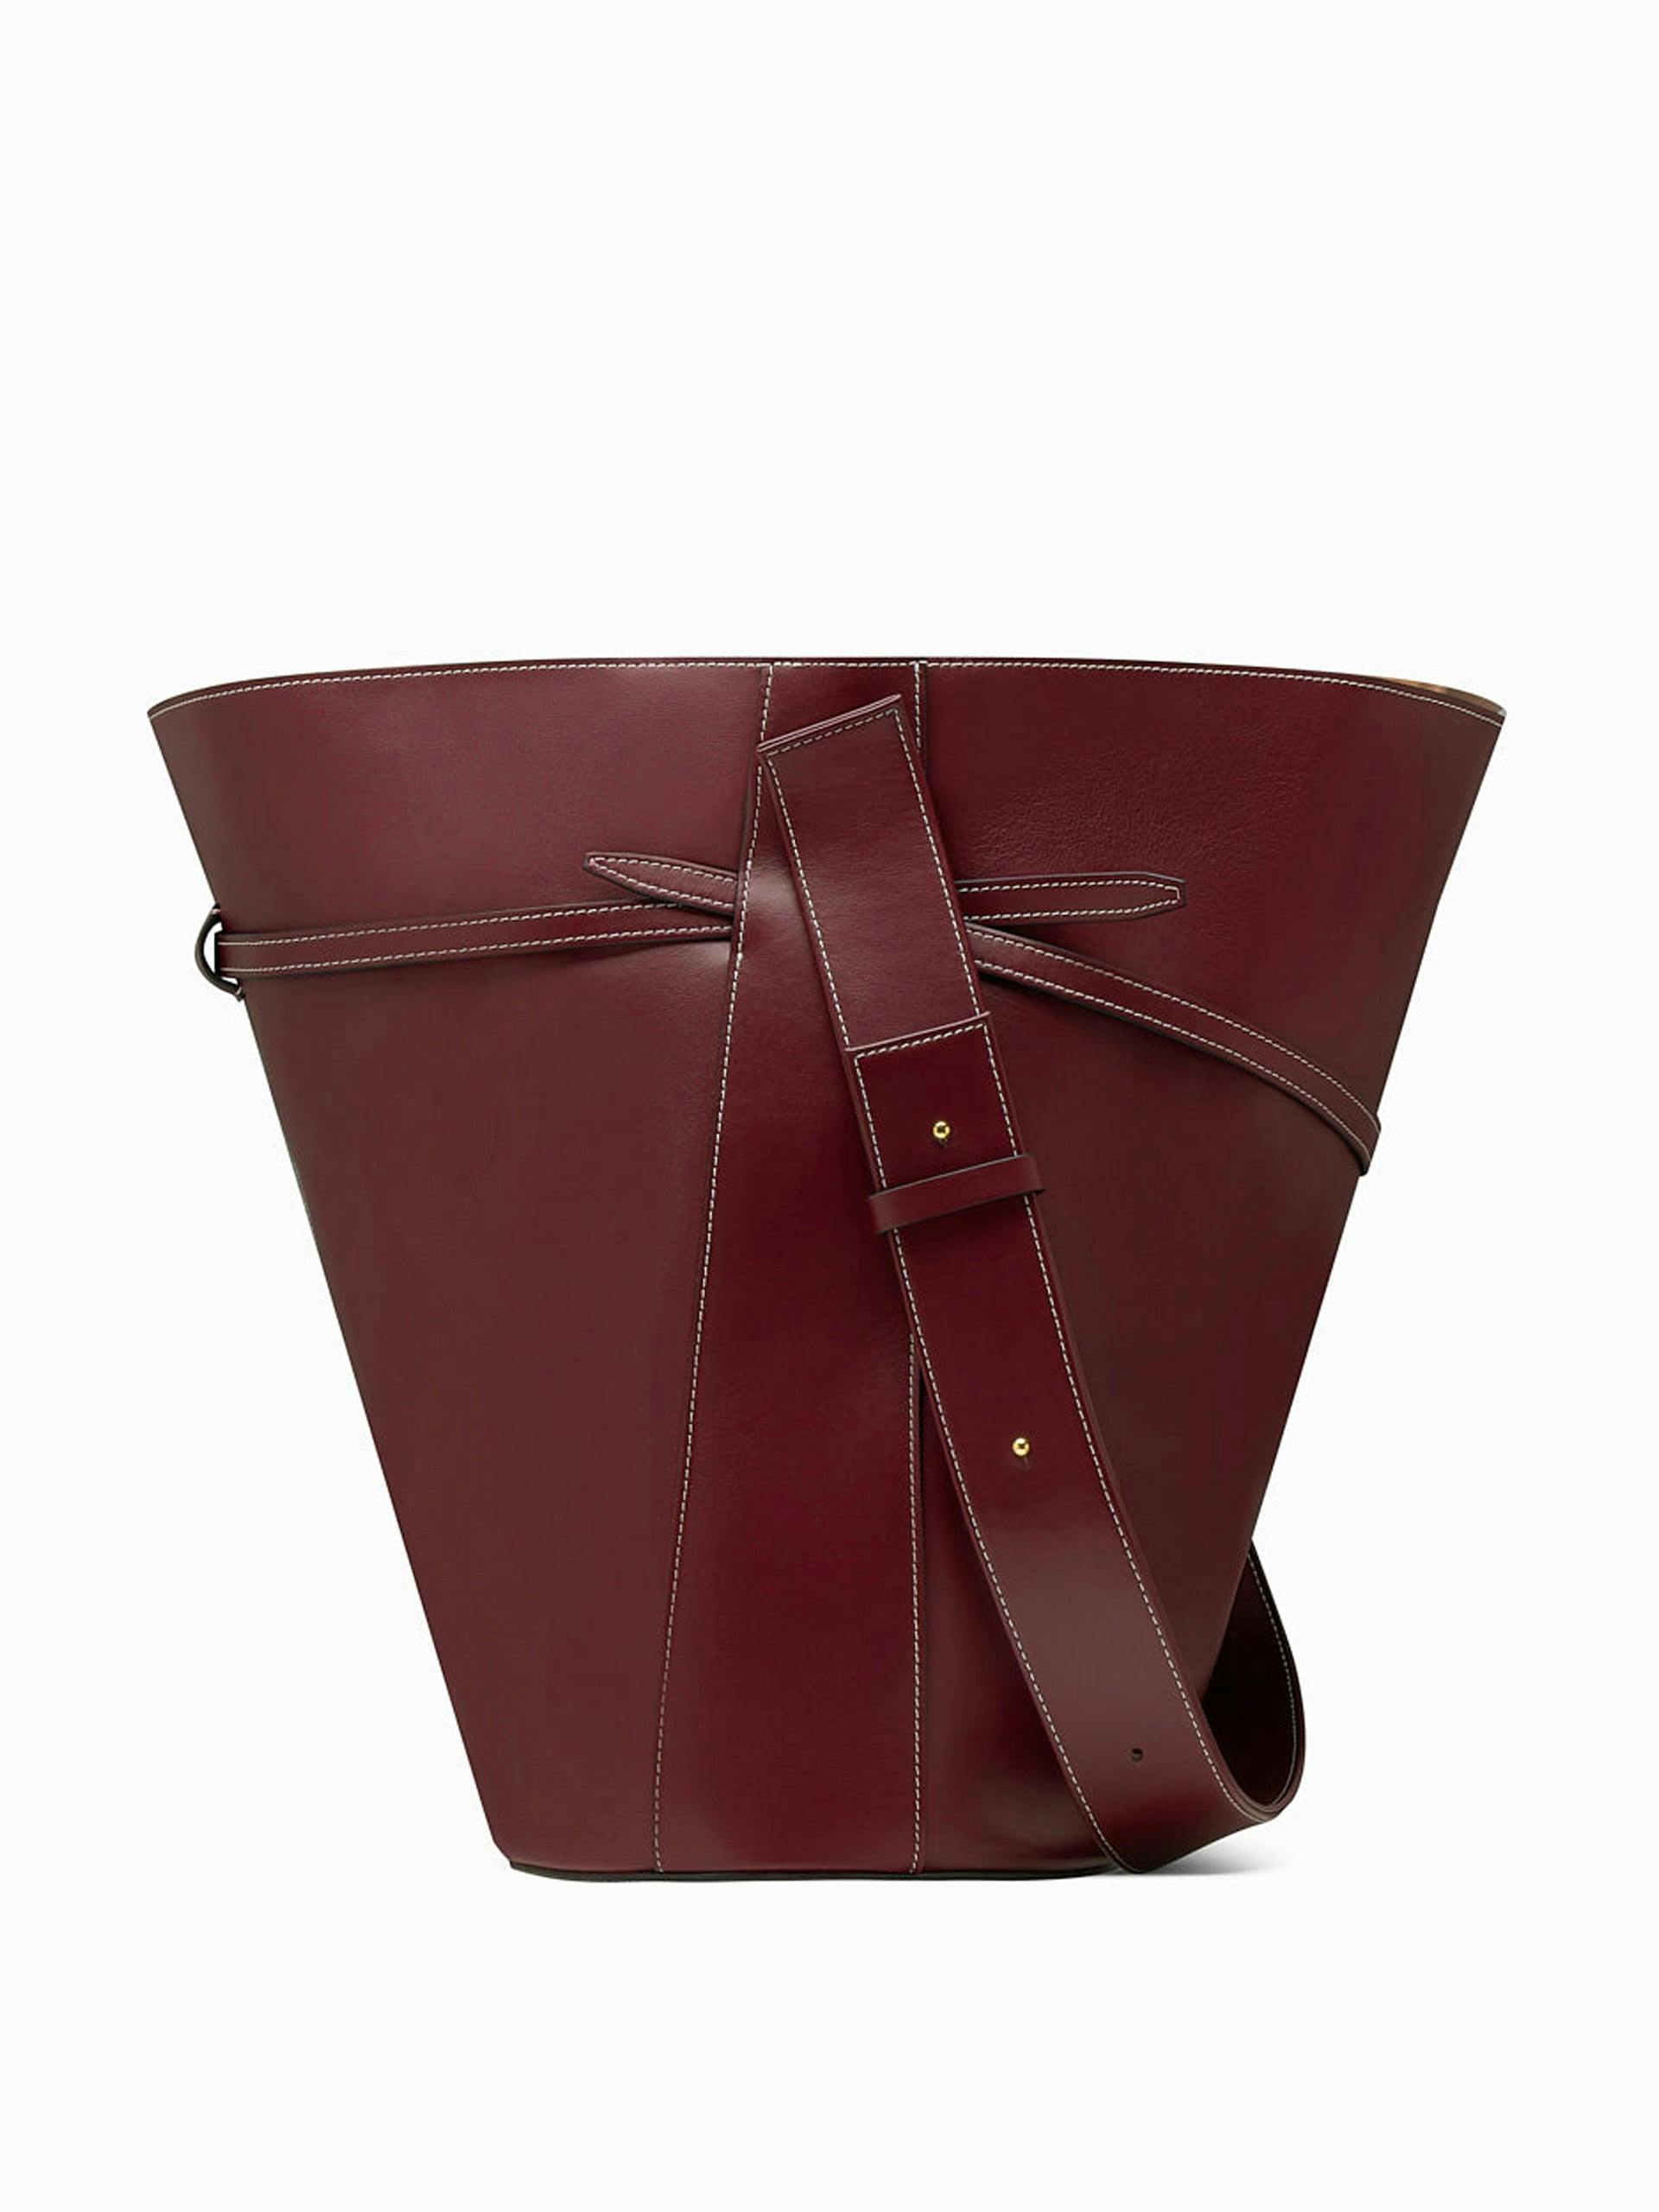 Sigma bucket bag, burgundy